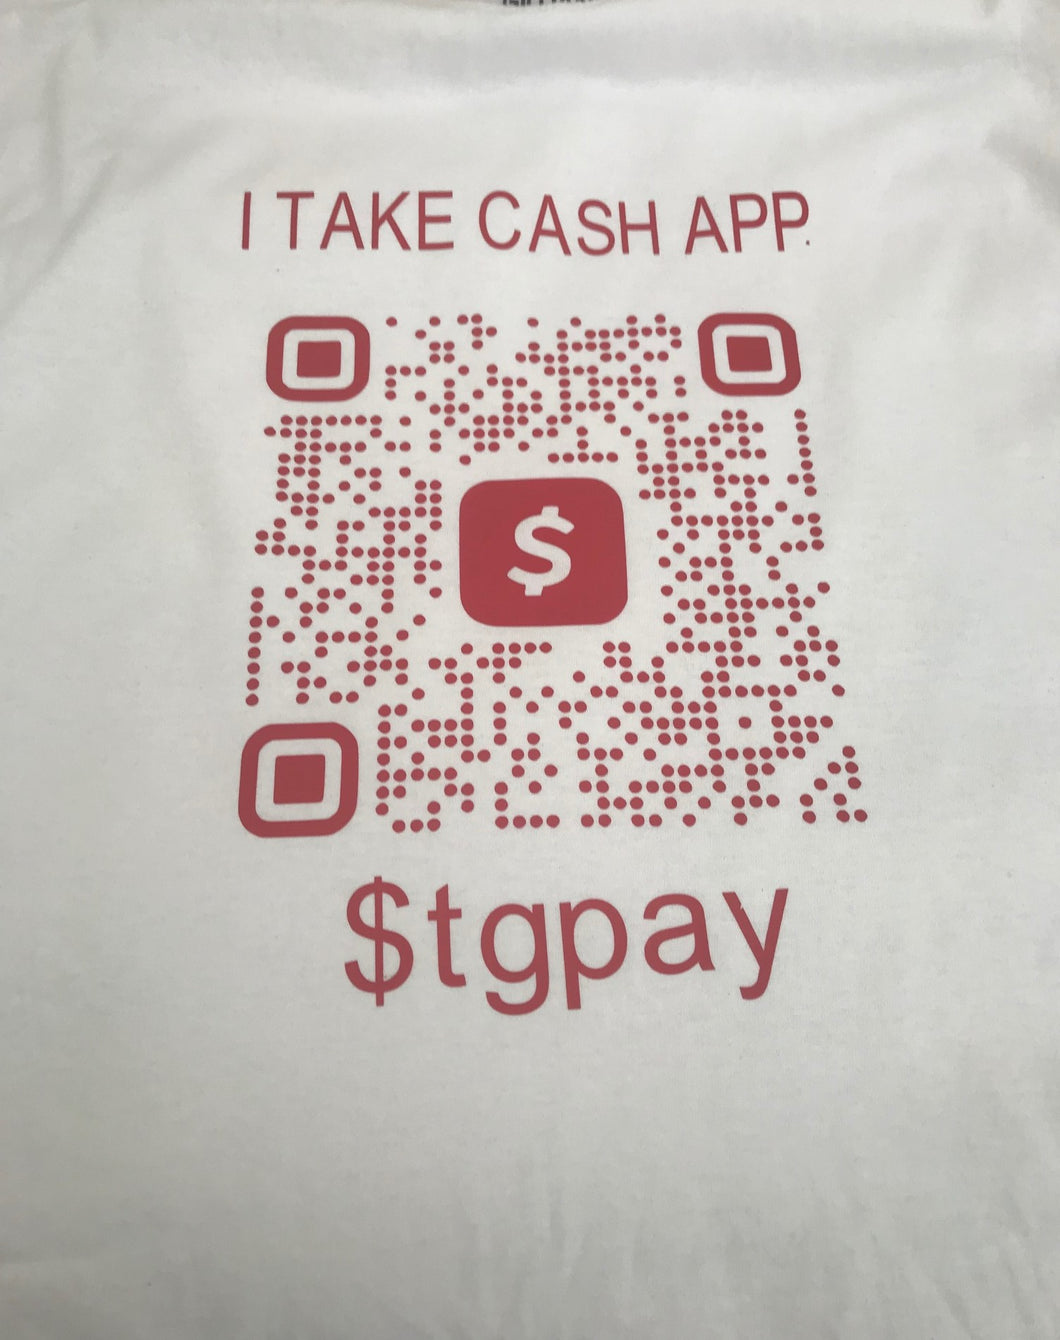 The Cash APP shirt